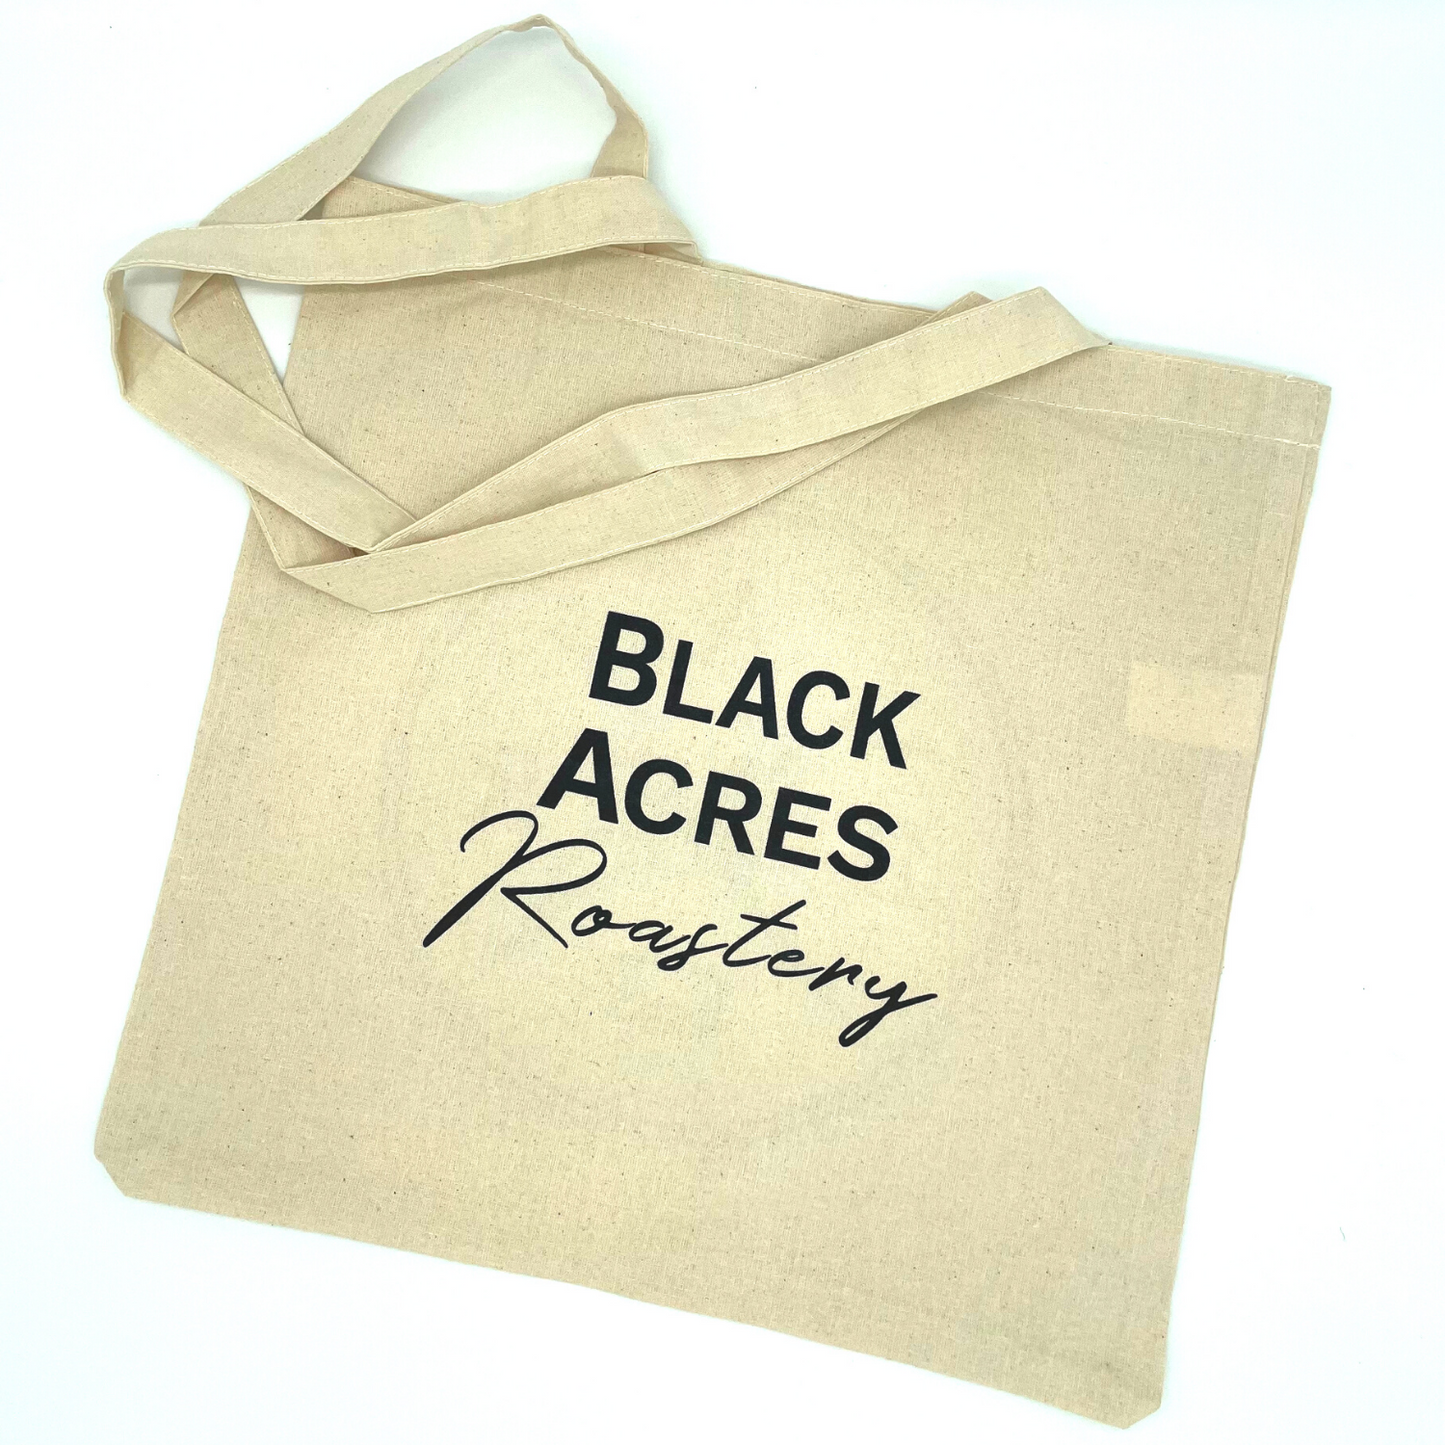 Black Acres Canvas Tote Bag